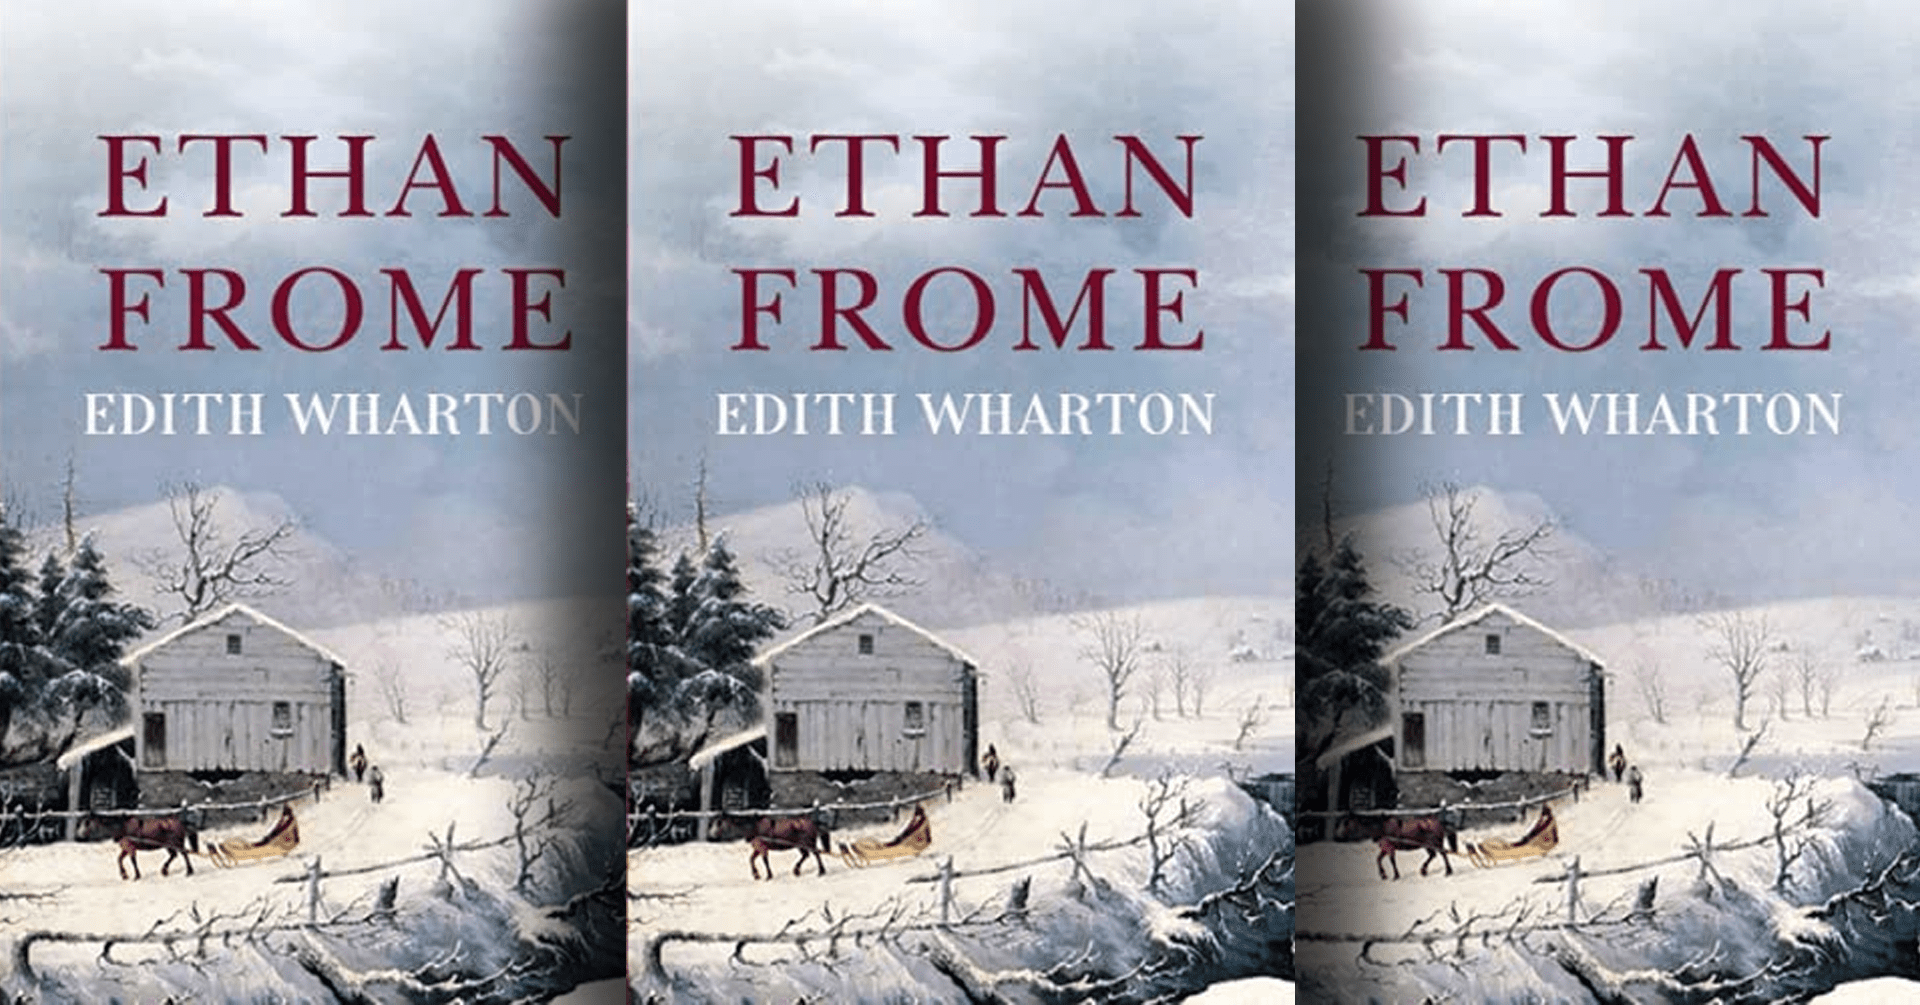 Ethan Frome by Edith Wharton (book cover)